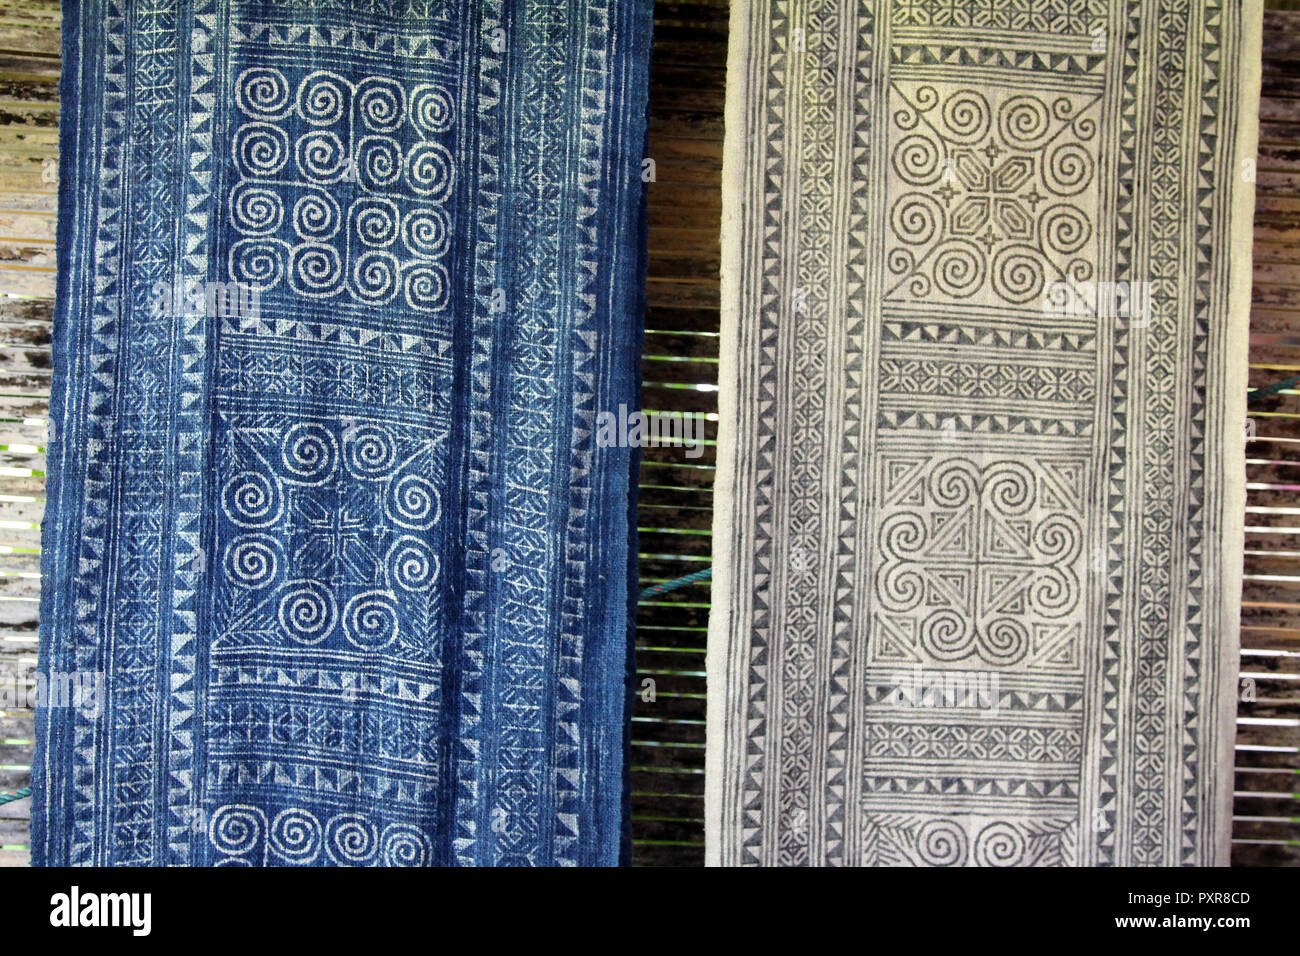 Blue Hmong batik designs made from hot wax on hemp cloth, showing before and after indigo dye bath at Ock Pop Tok, Luang Prabang, Laos Stock Photo